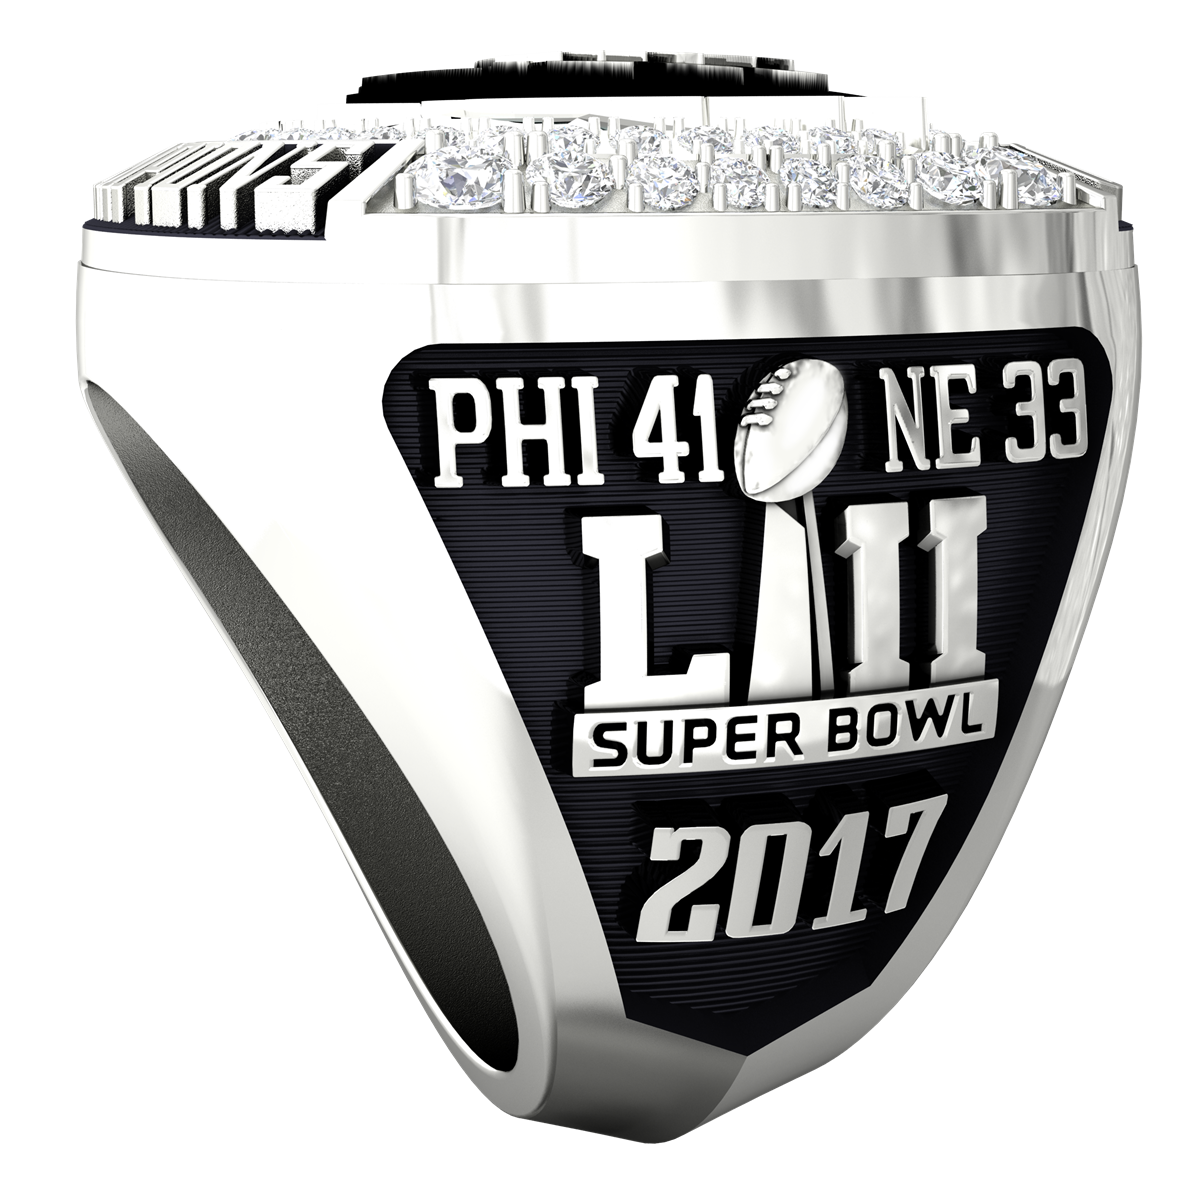 Jewelry Company Selling Eagles Super Bowl Replica Rings 